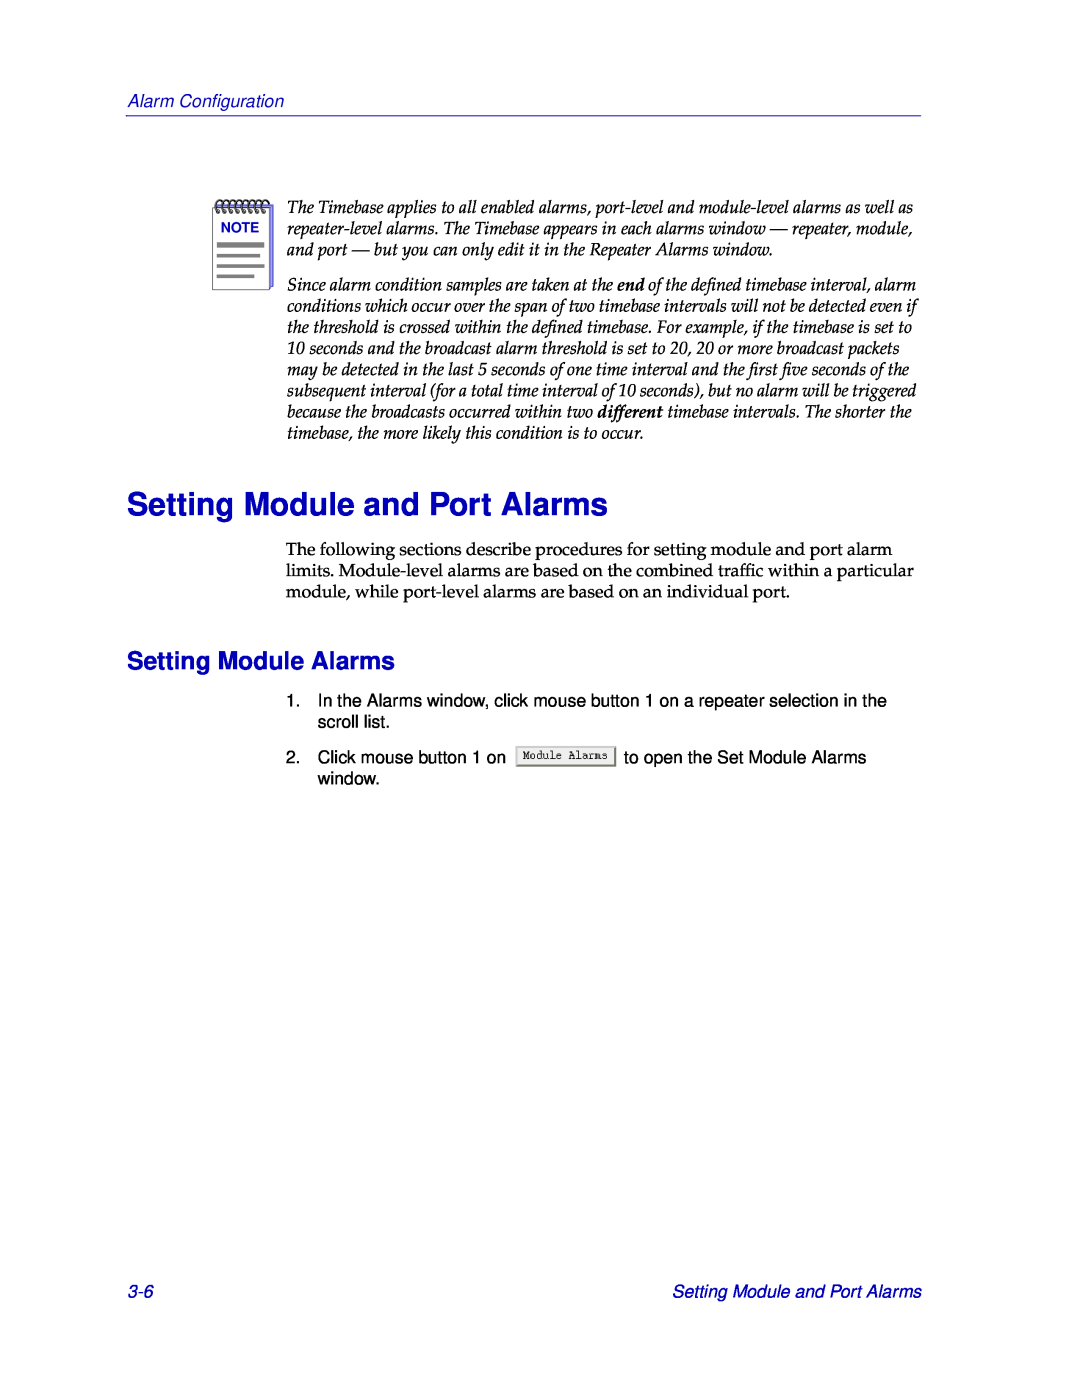 Cabletron Systems EMM-E6 manual Setting Module and Port Alarms, Setting Module Alarms, Alarm Conﬁguration 